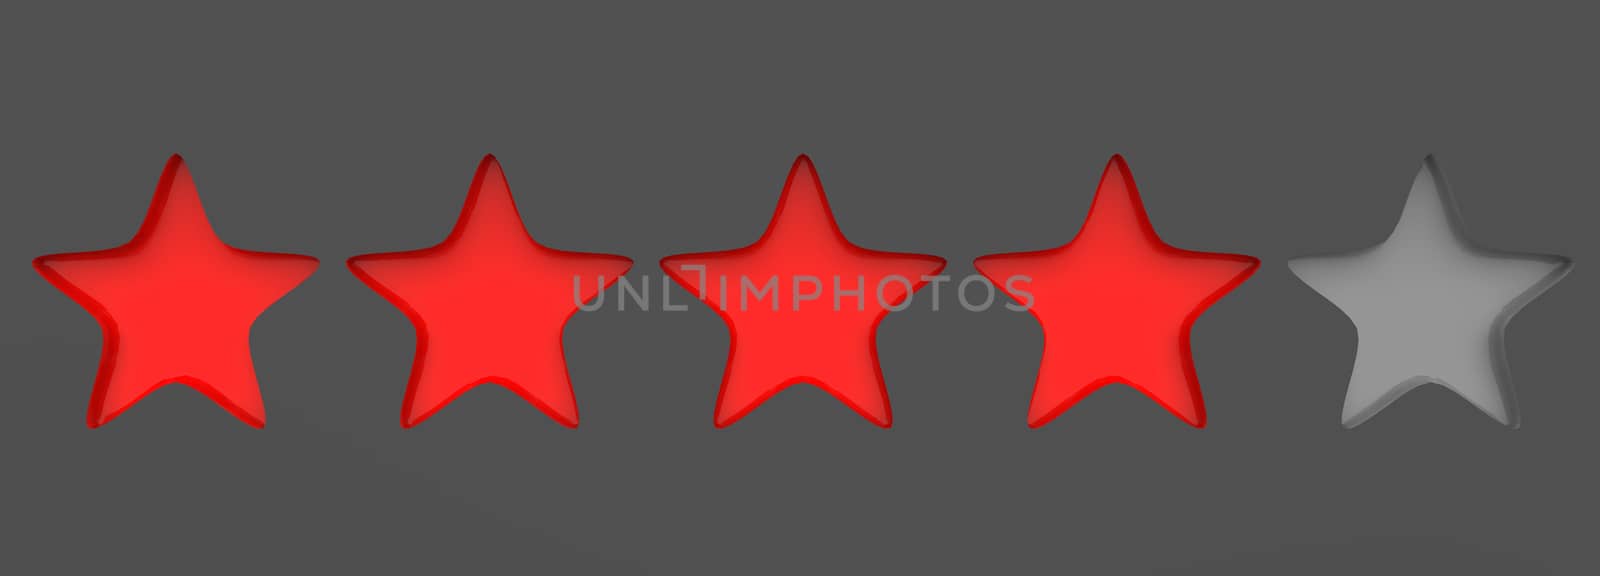 3d four red star on color background. Render and illustration of golden star for premium